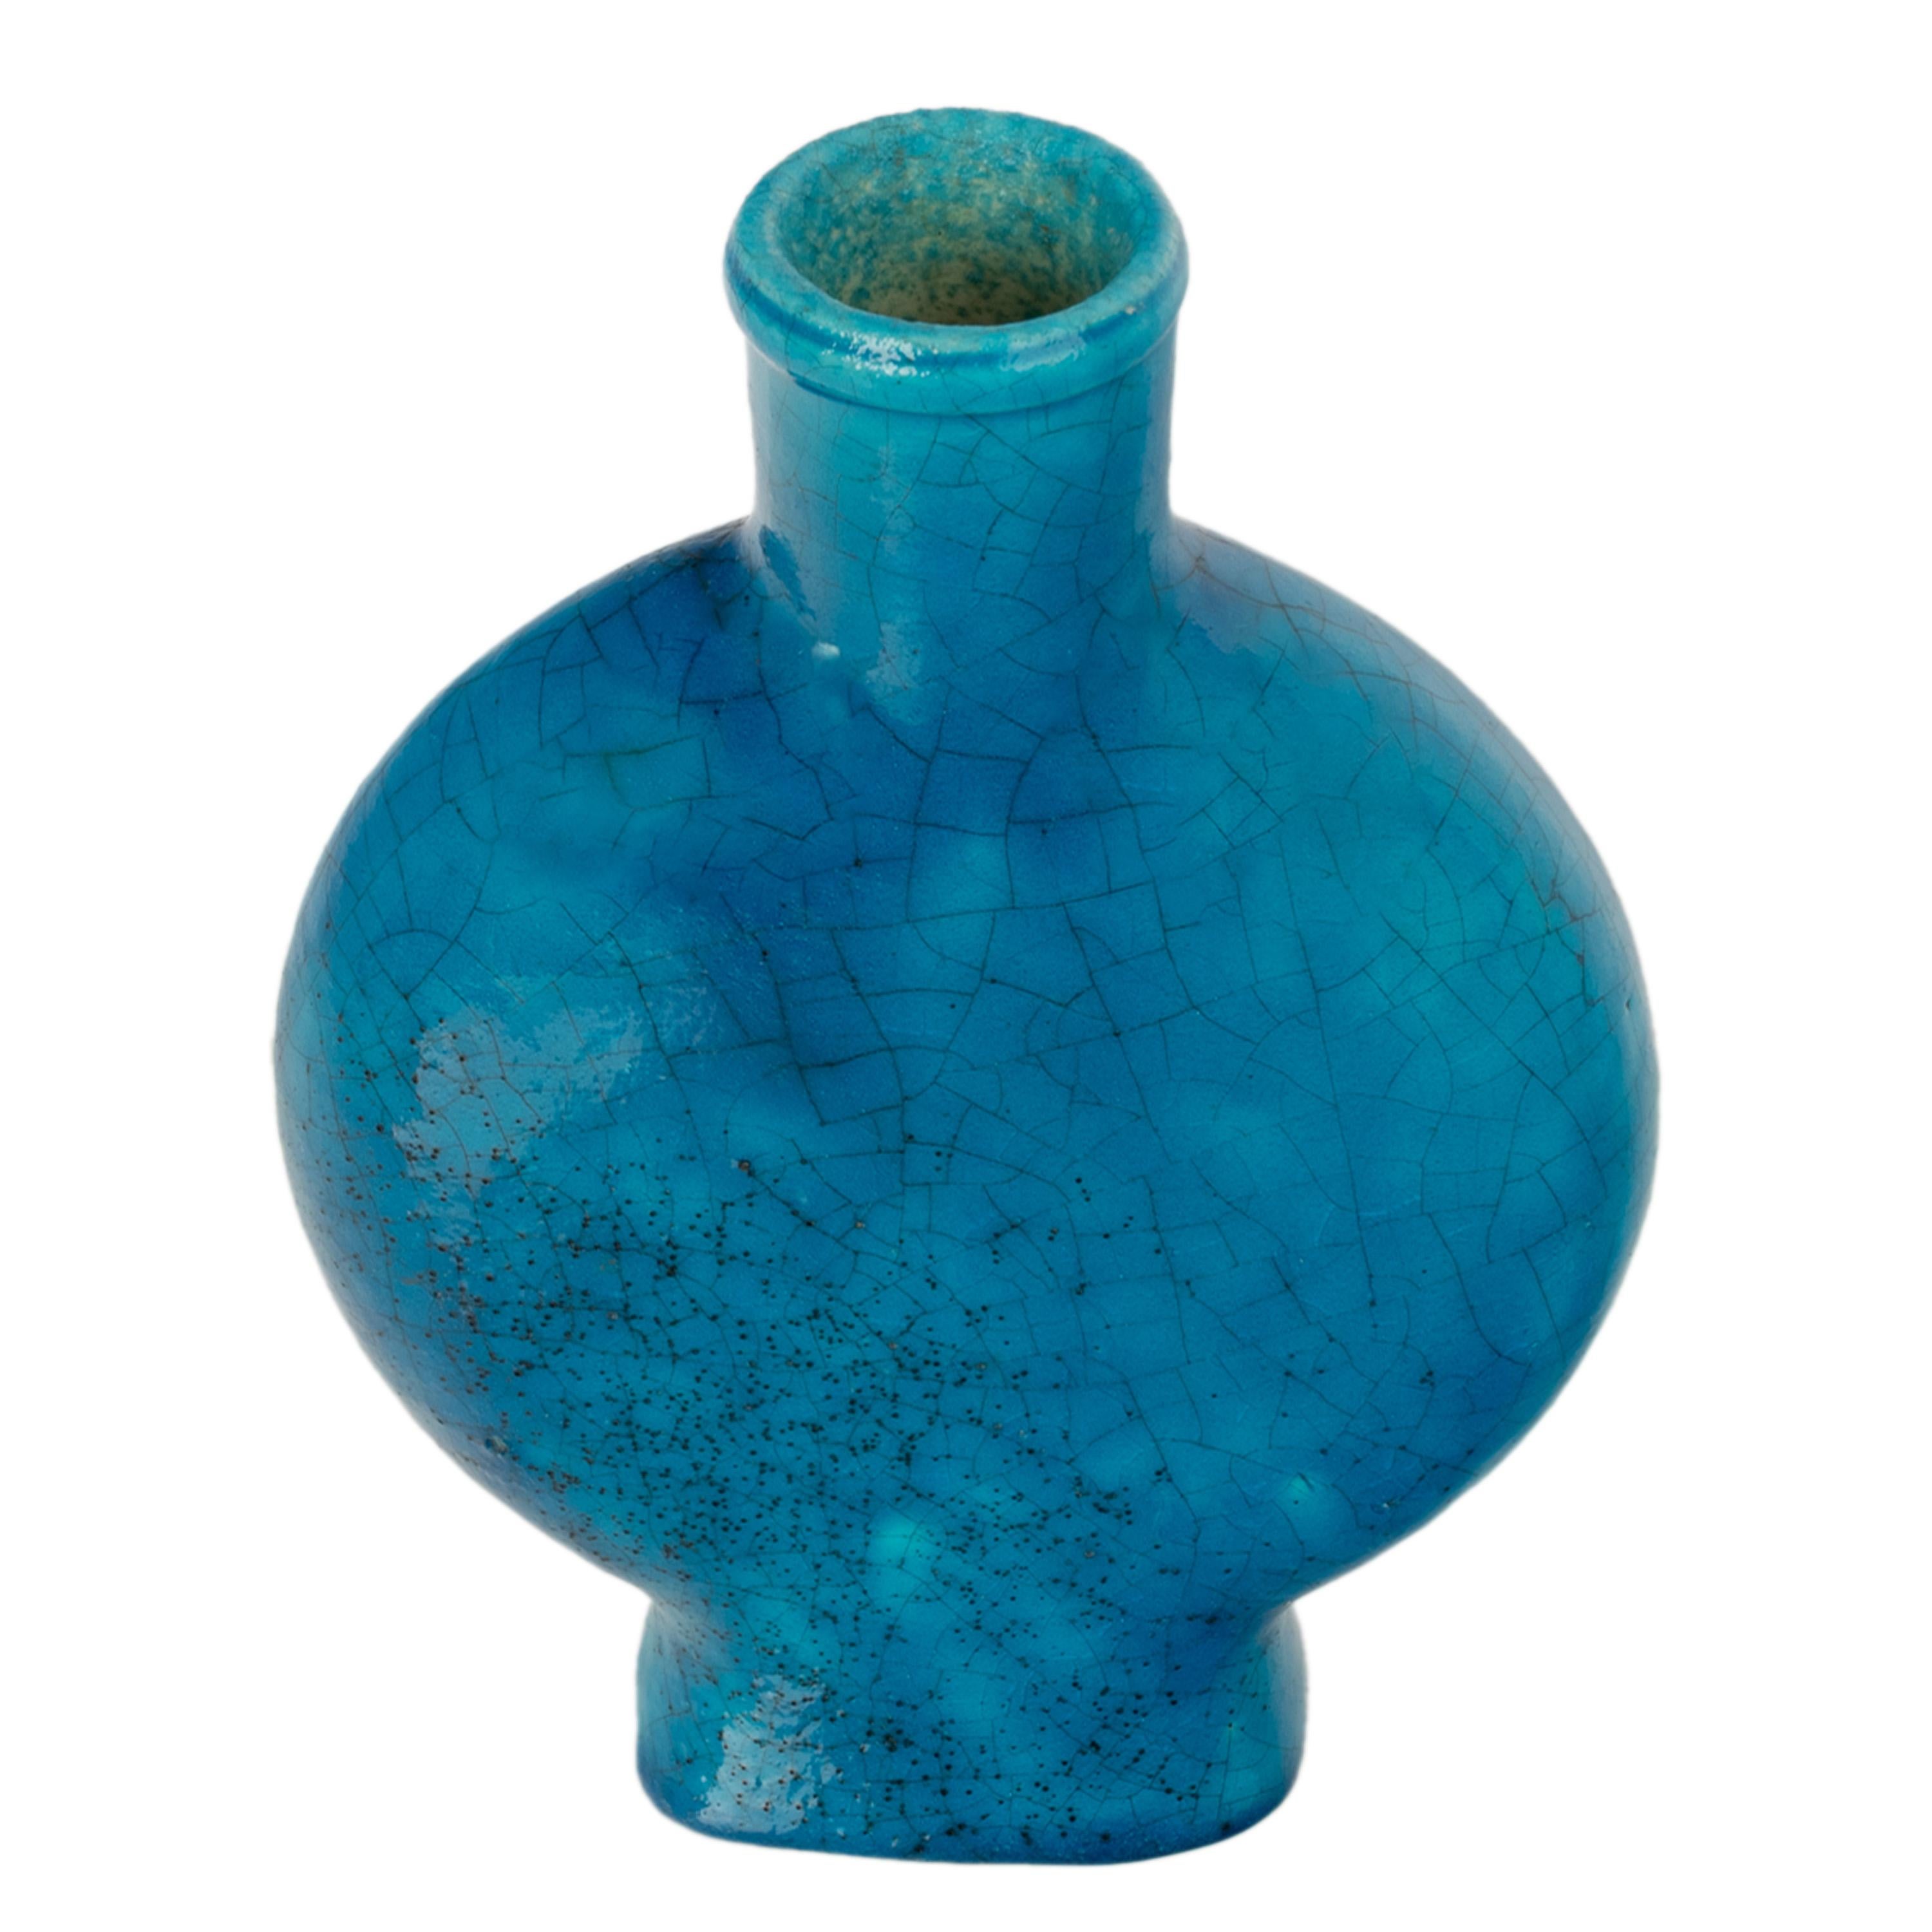 Antique French Art Deco Turquoise Blue Pottery Vase Edmond Lachenal Signed 1930 For Sale 4